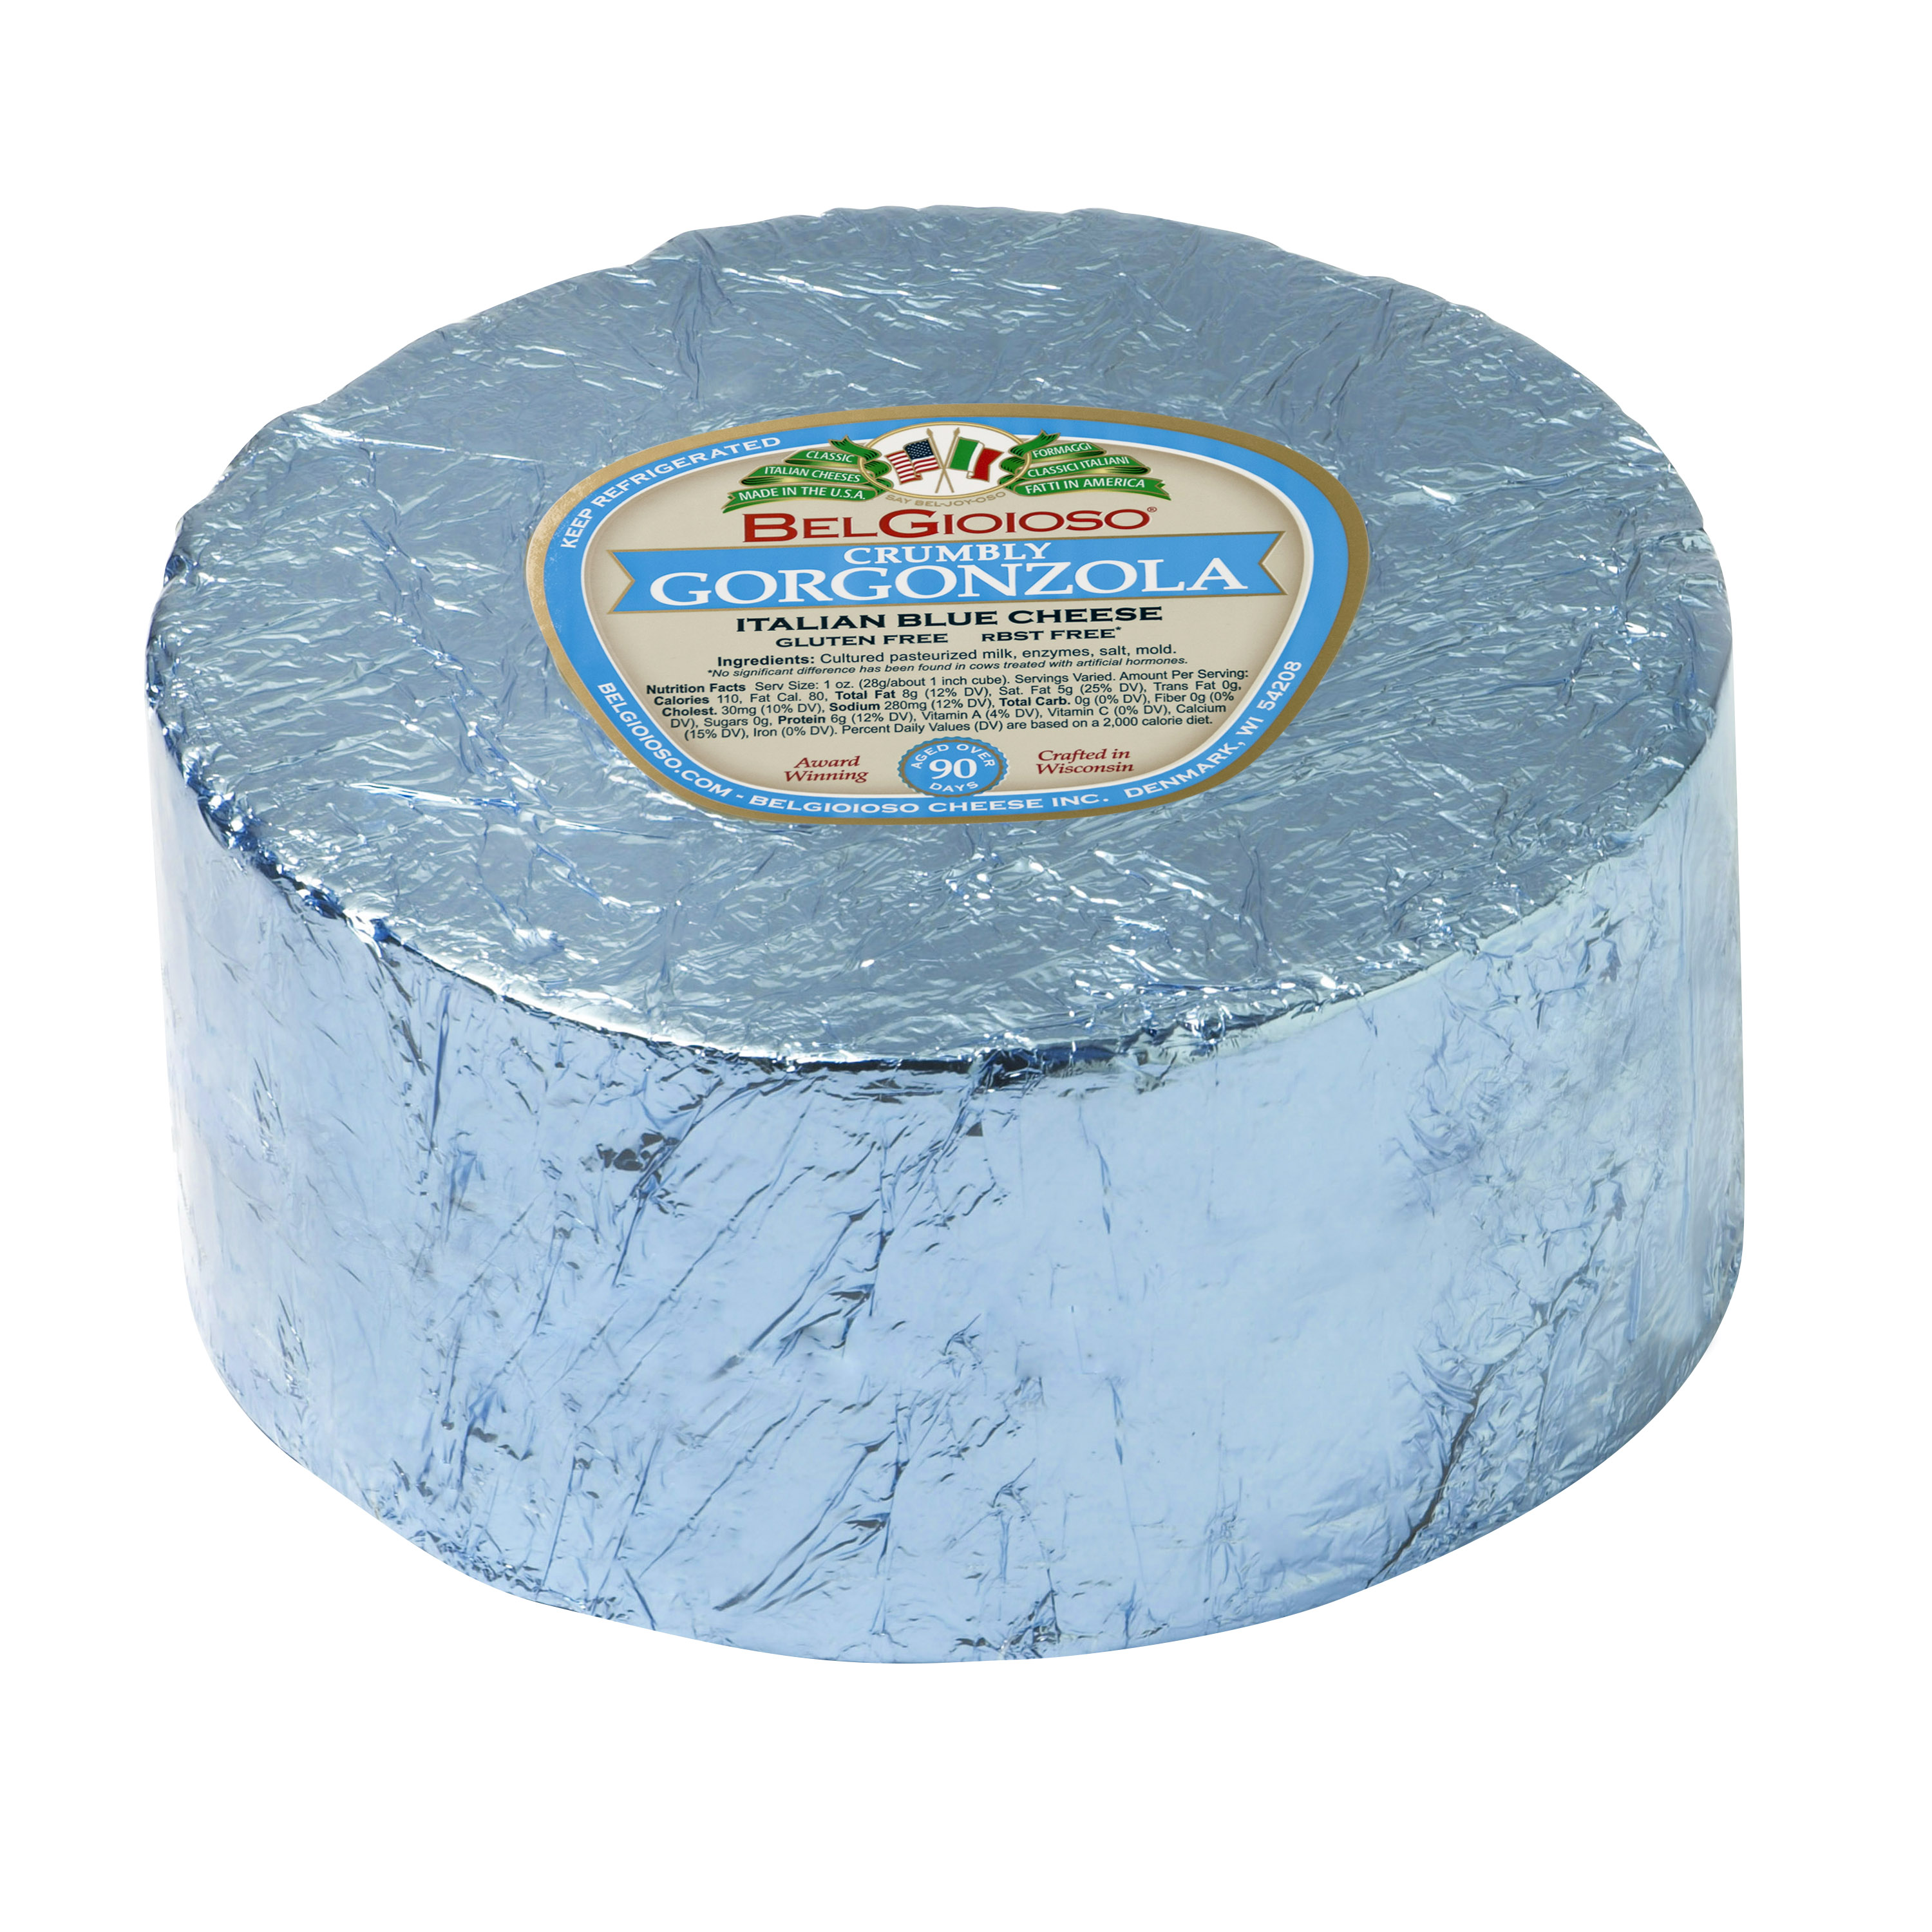 Crumbly Gorg 16 Lb - BelGioioso Cheese